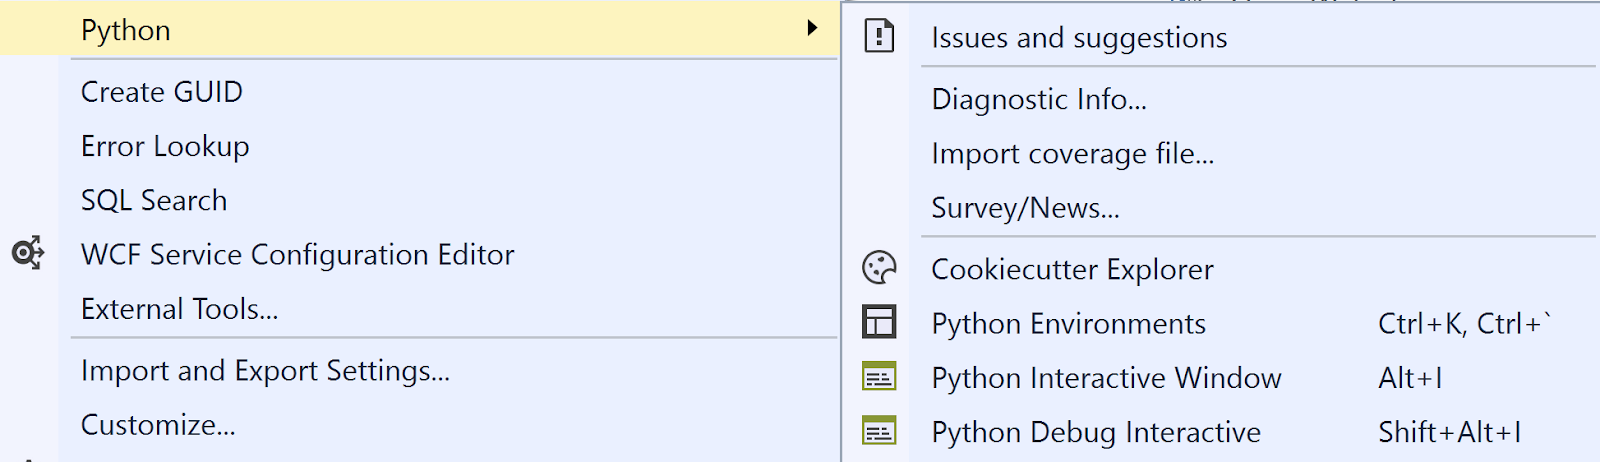 python installs for visual studio code for mac